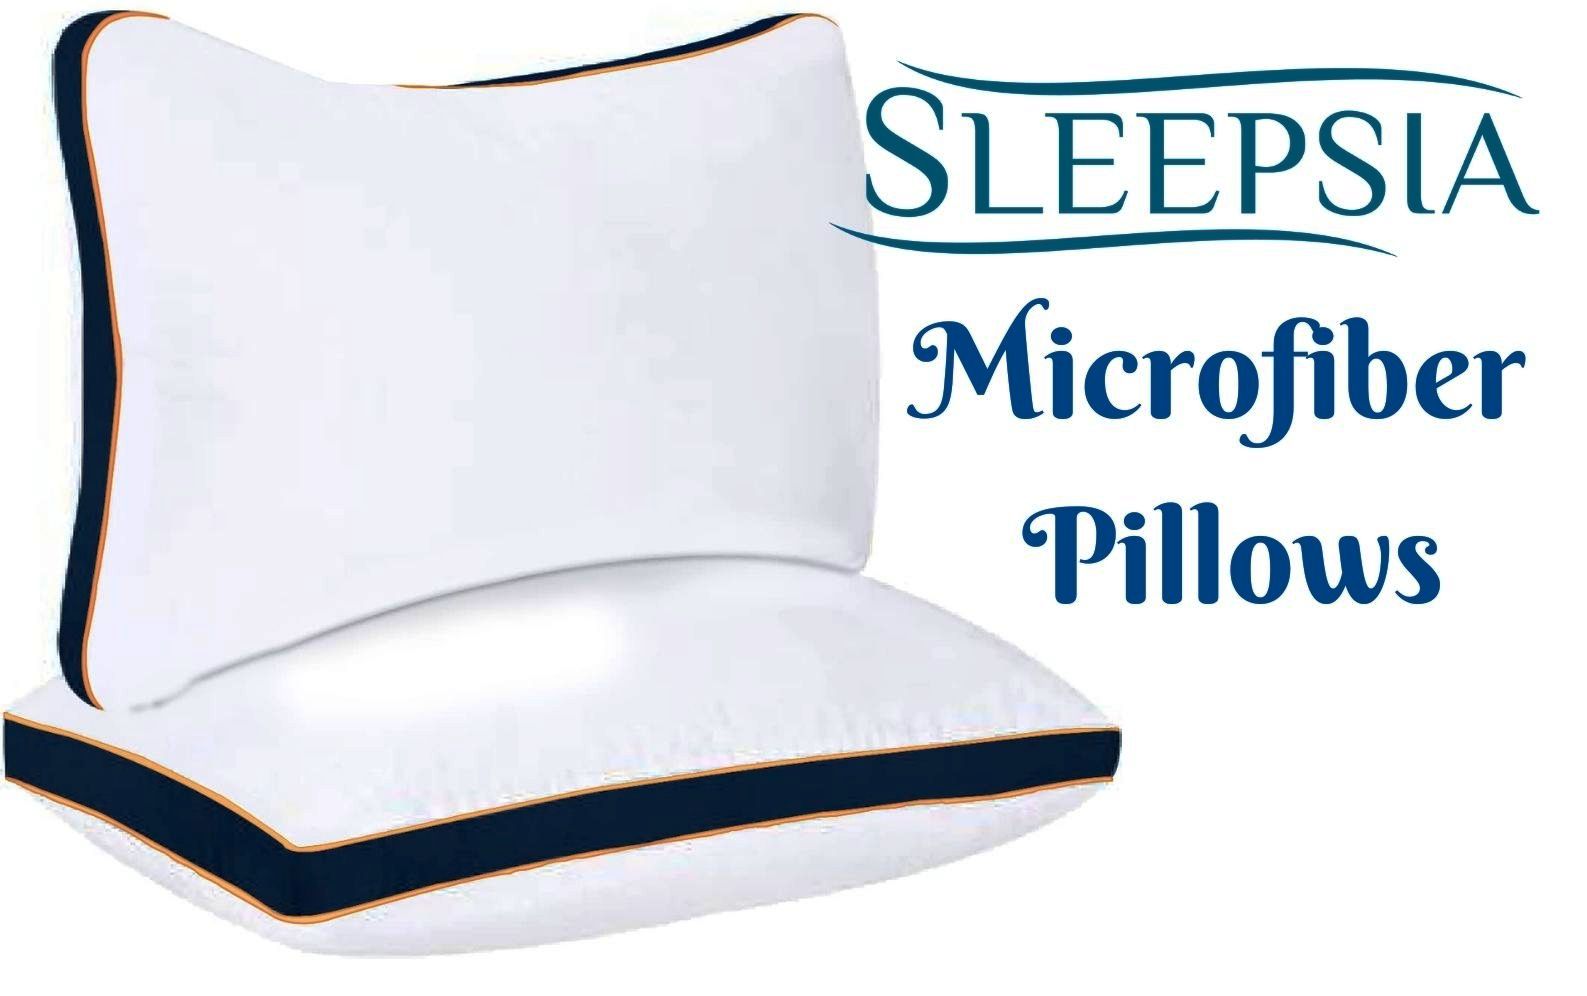 Microfiber Pillows: 7 Ways It Will Improve Your Night’s Sleep